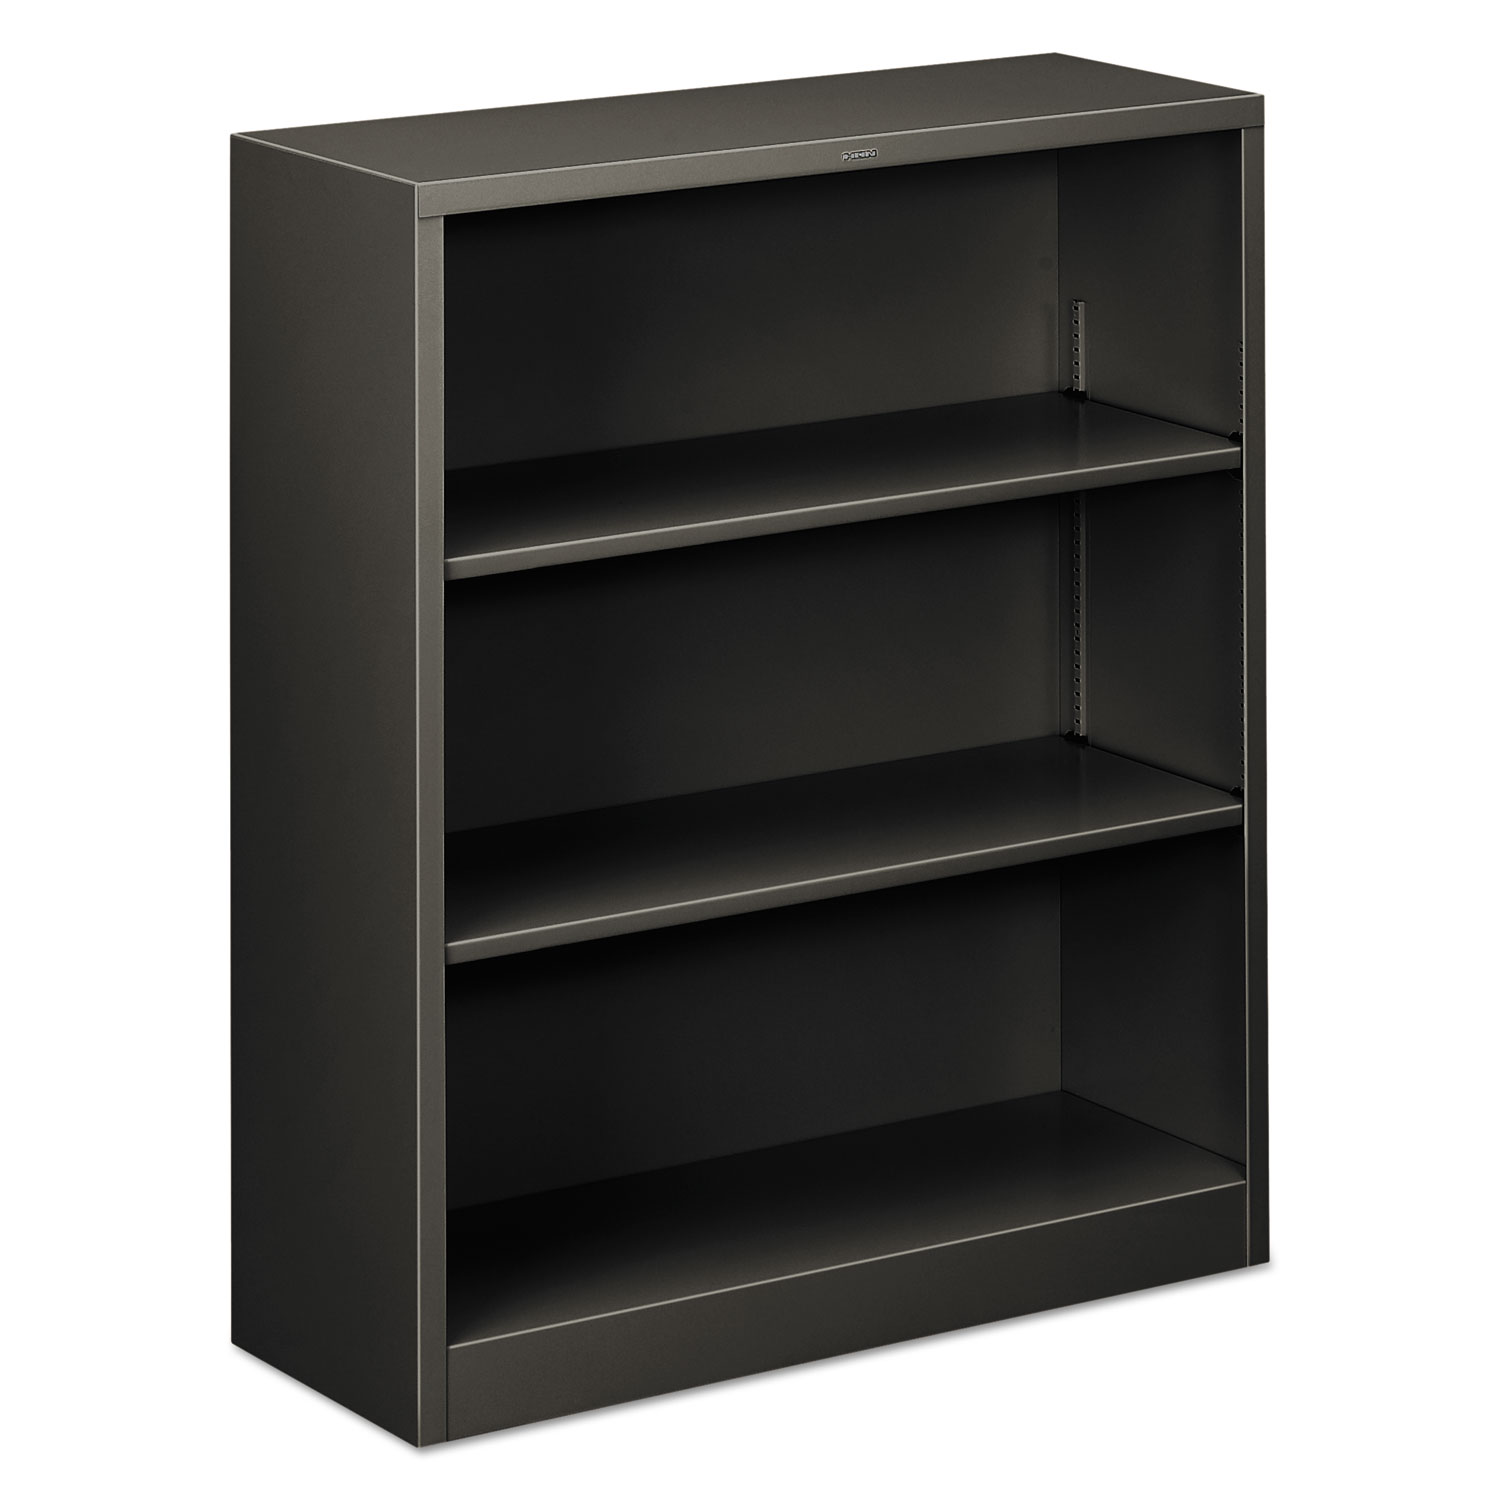  HON HS42ABC.S Metal Bookcase, Three-Shelf, 34-1/2w x 12-5/8d x 41h, Charcoal (HONS42ABCS) 